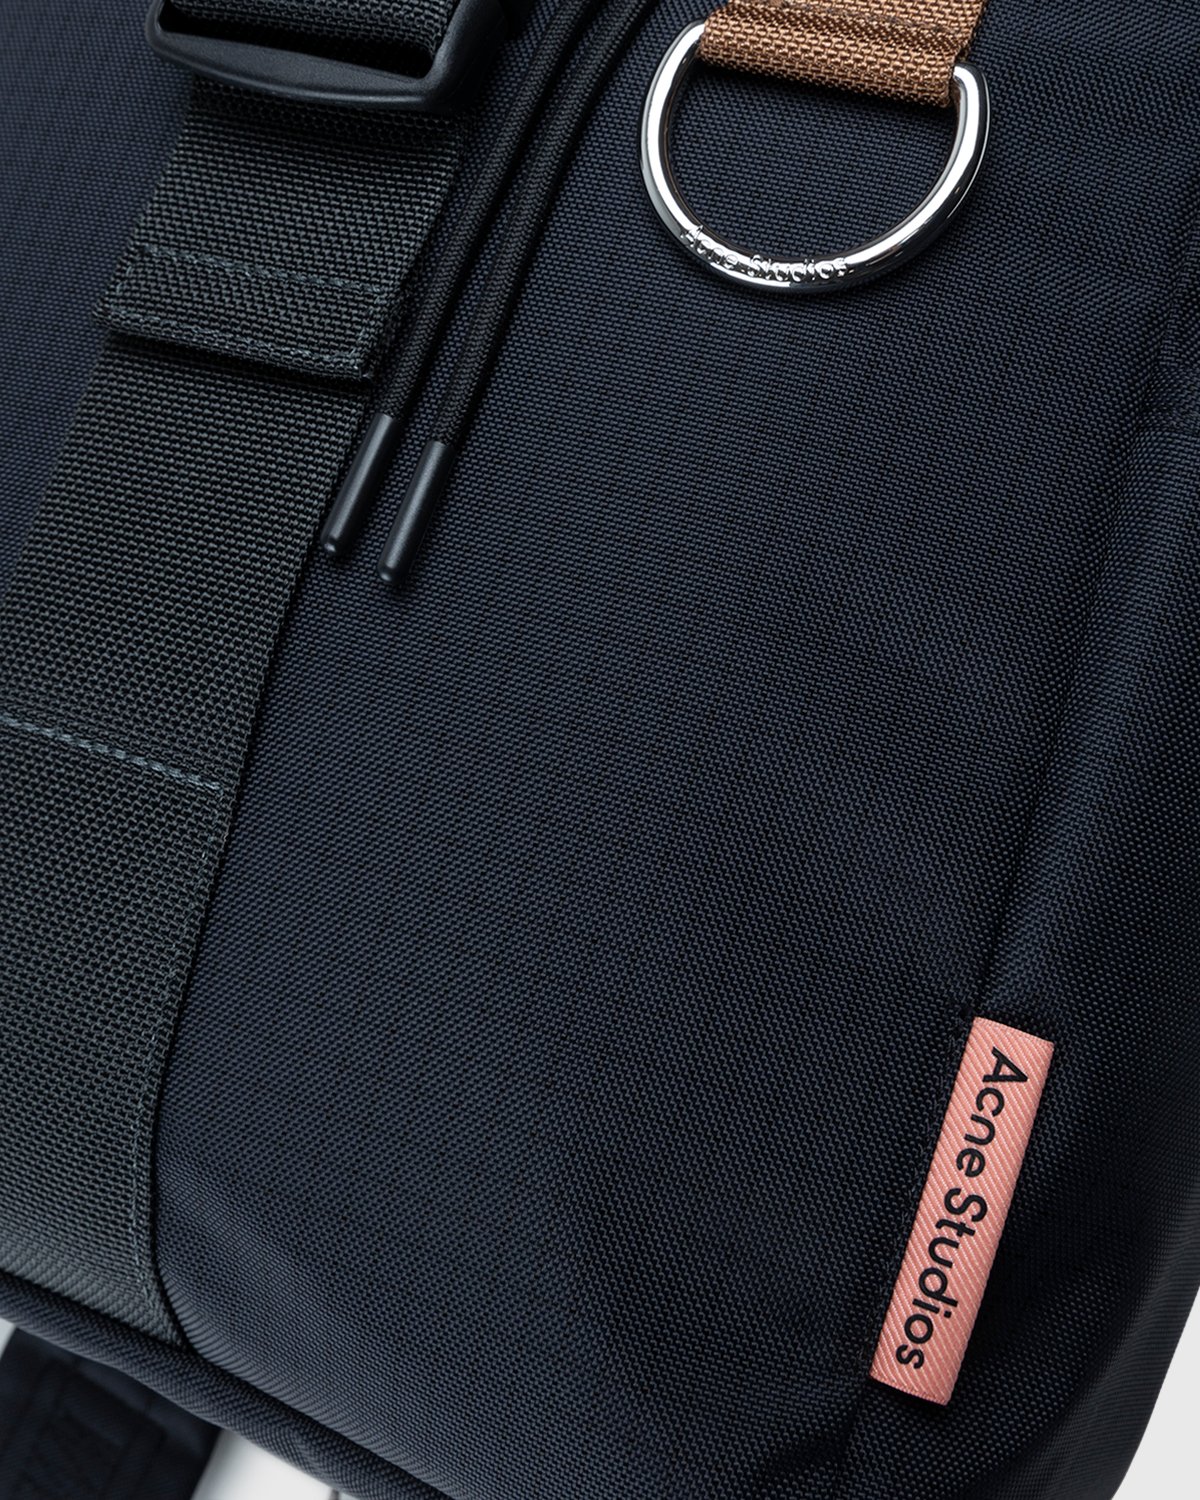 Acne Studios - Ripstop Nylon Backpack Black - Accessories - Black - Image 4